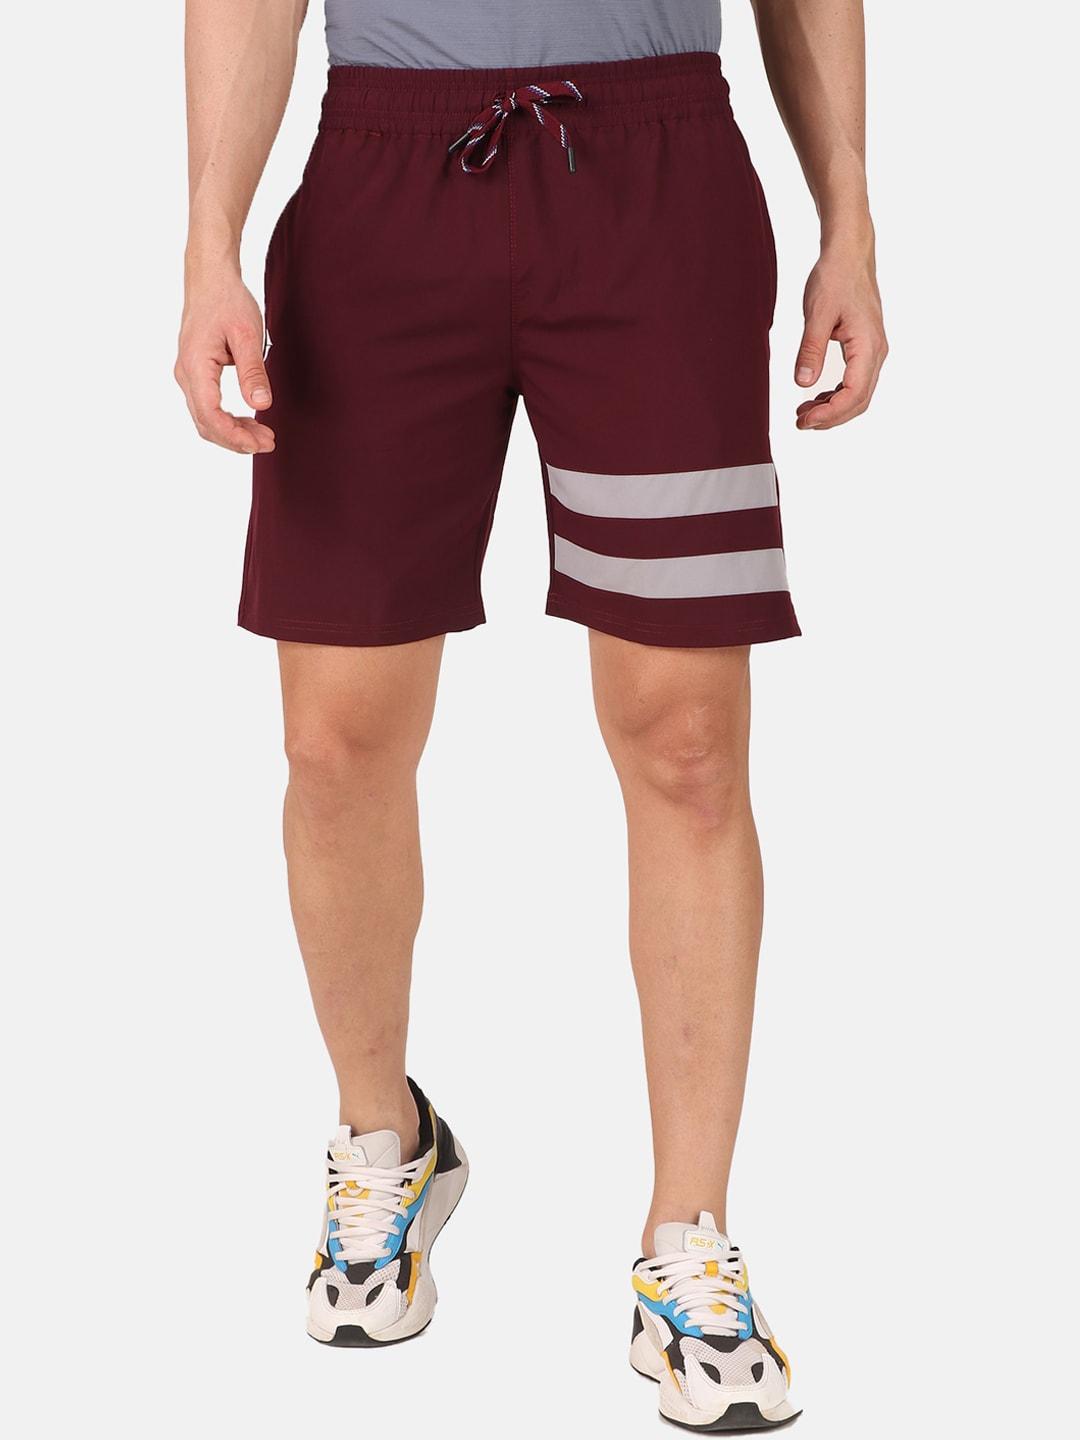 fitinc men maroon striped running sports shorts